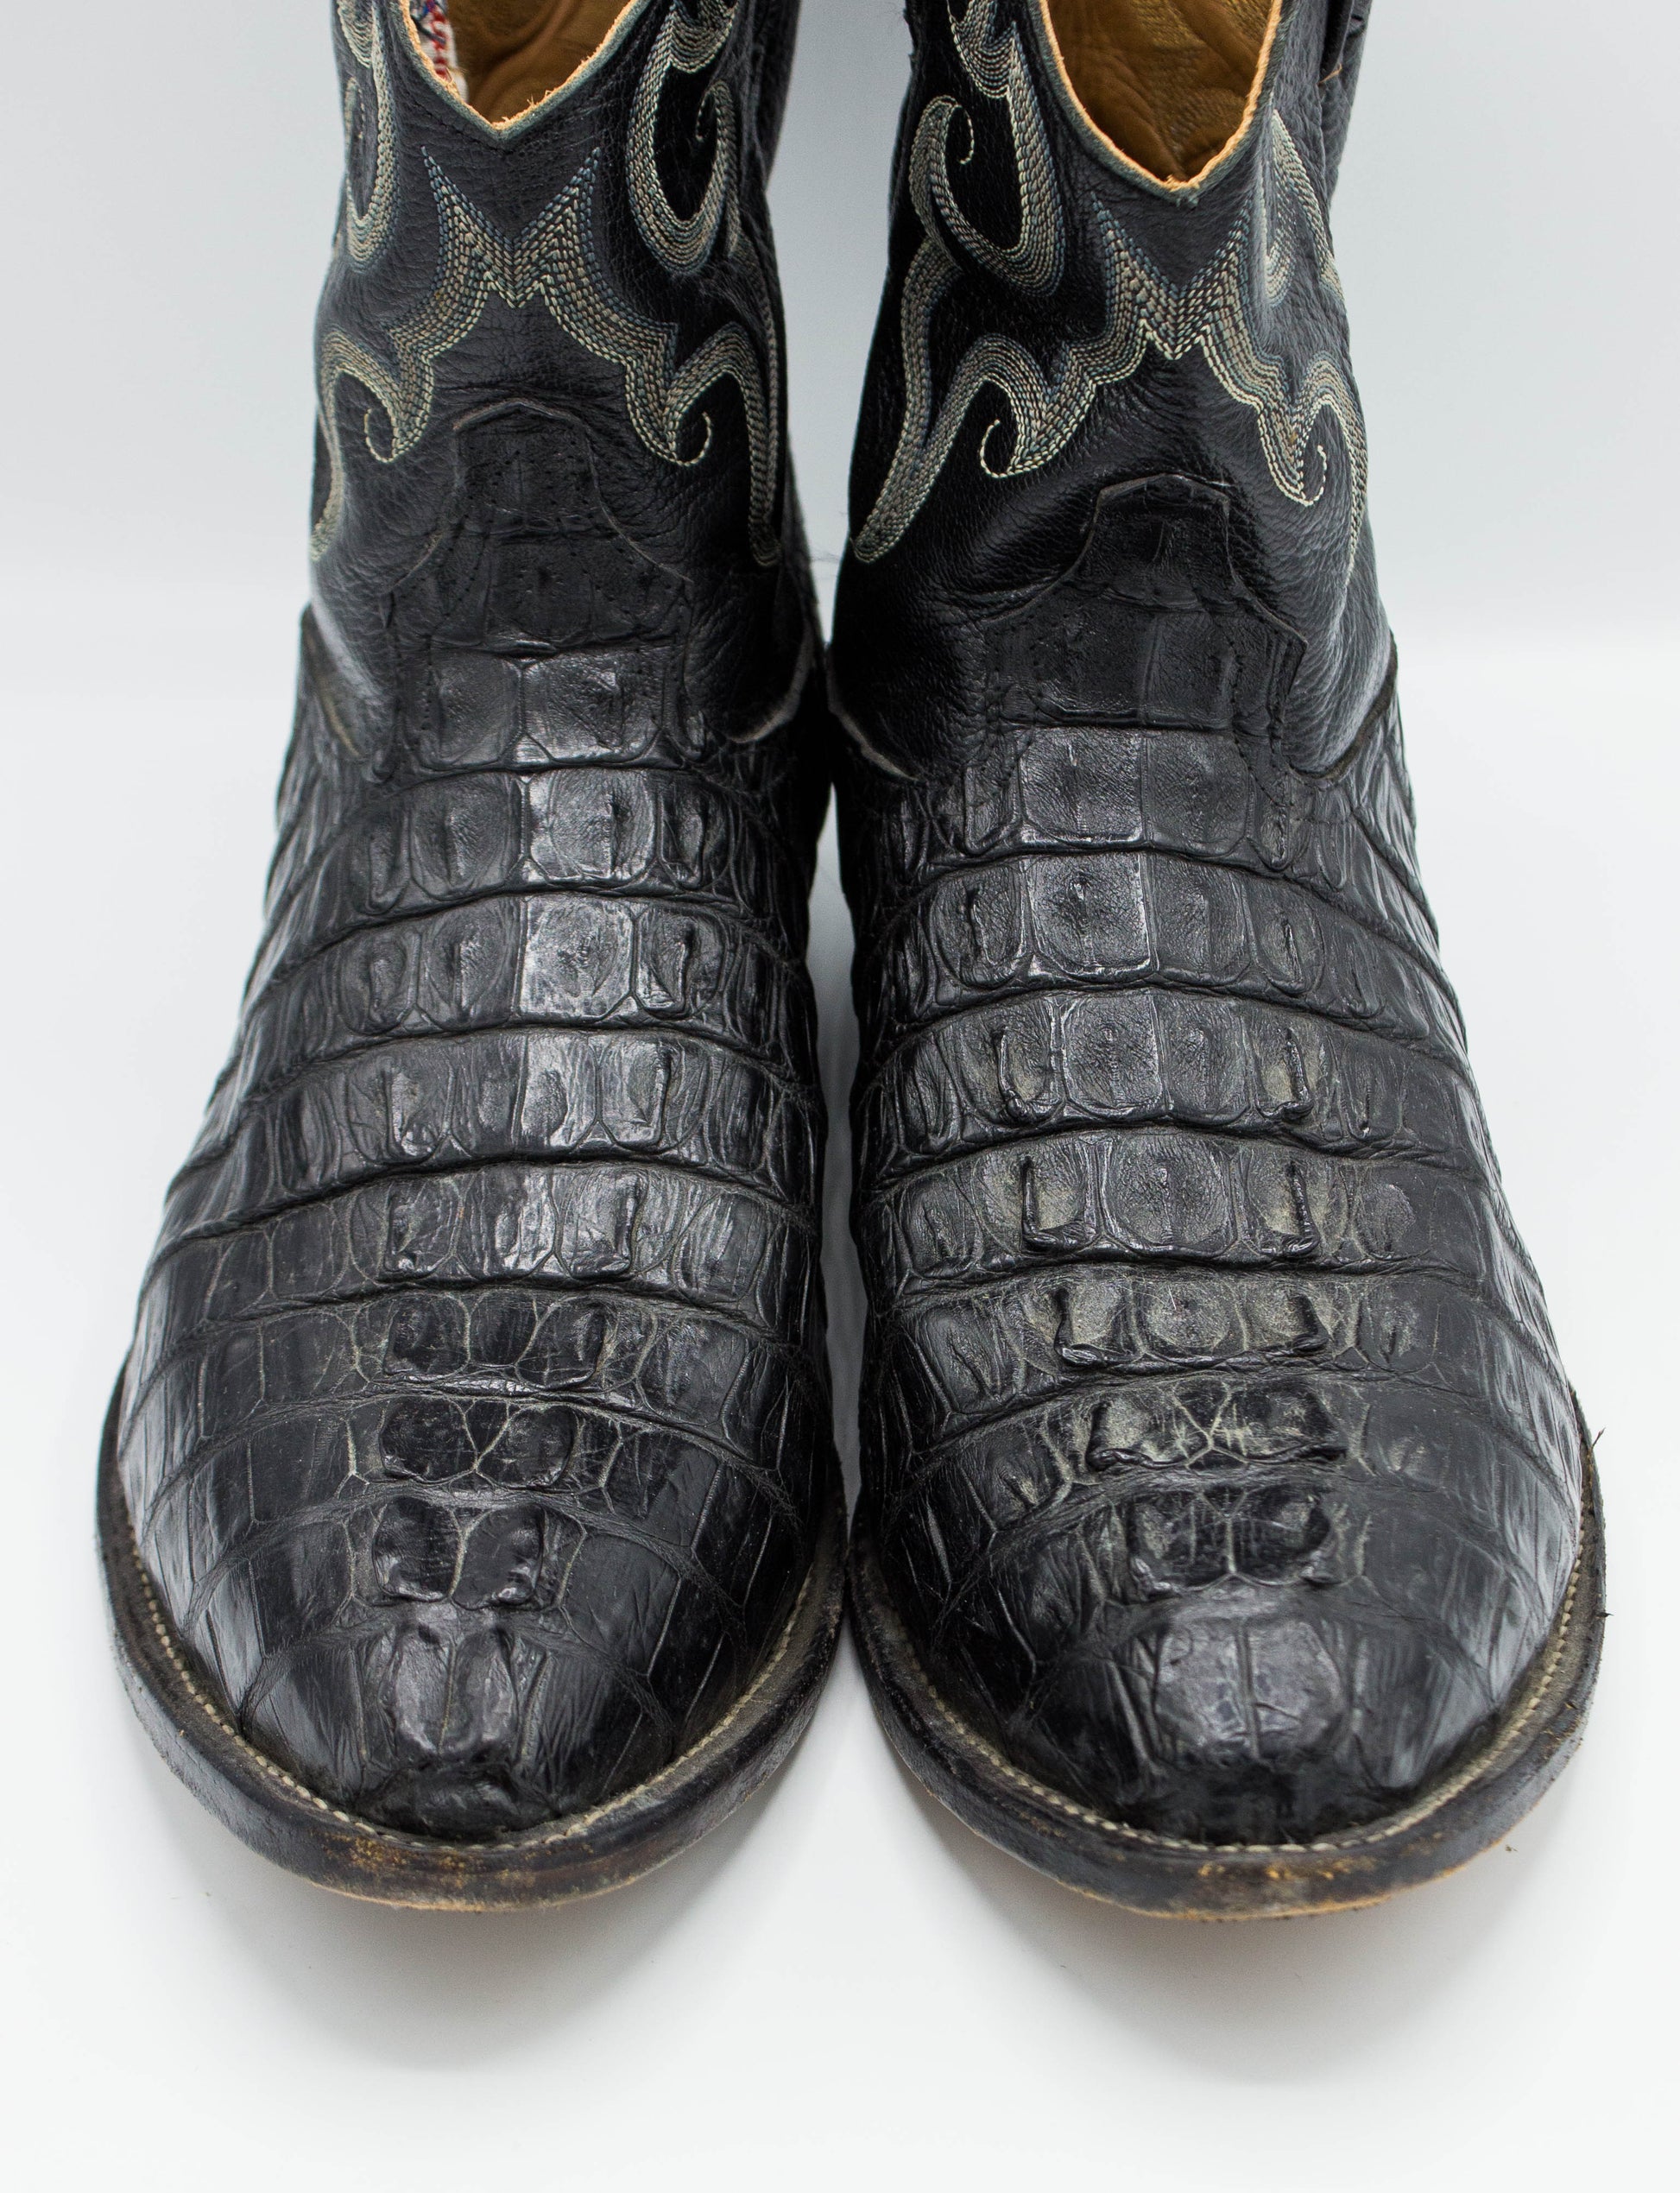 Vintage Men's Tony Lama Black Alligator Shorty Cowboy Boots Size 15